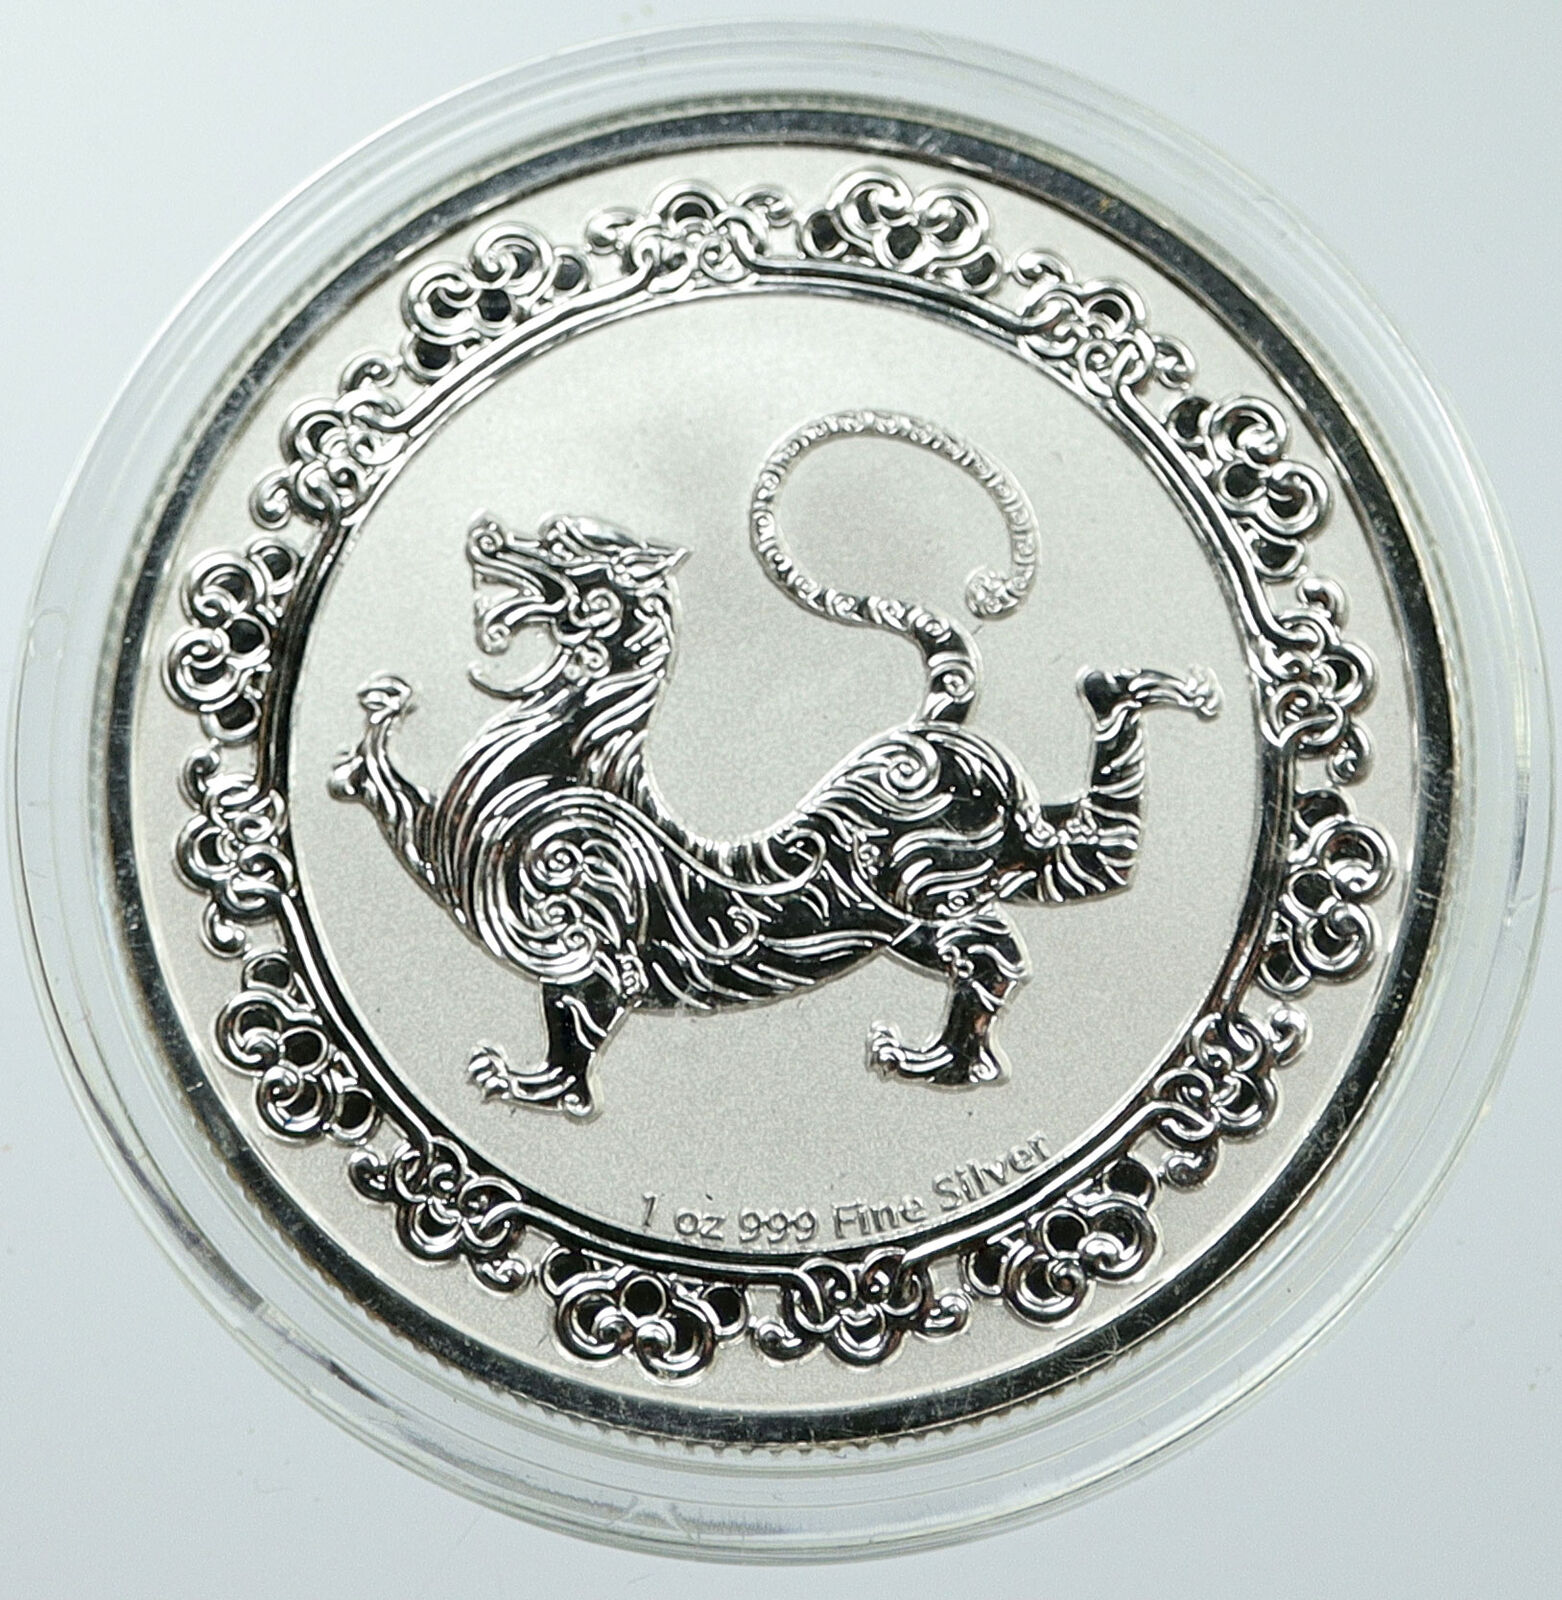 2019 NIUE UK Elizabeth II WHITE TIGER 1 OZ Proof Silver $2 Dollar Coin i116560